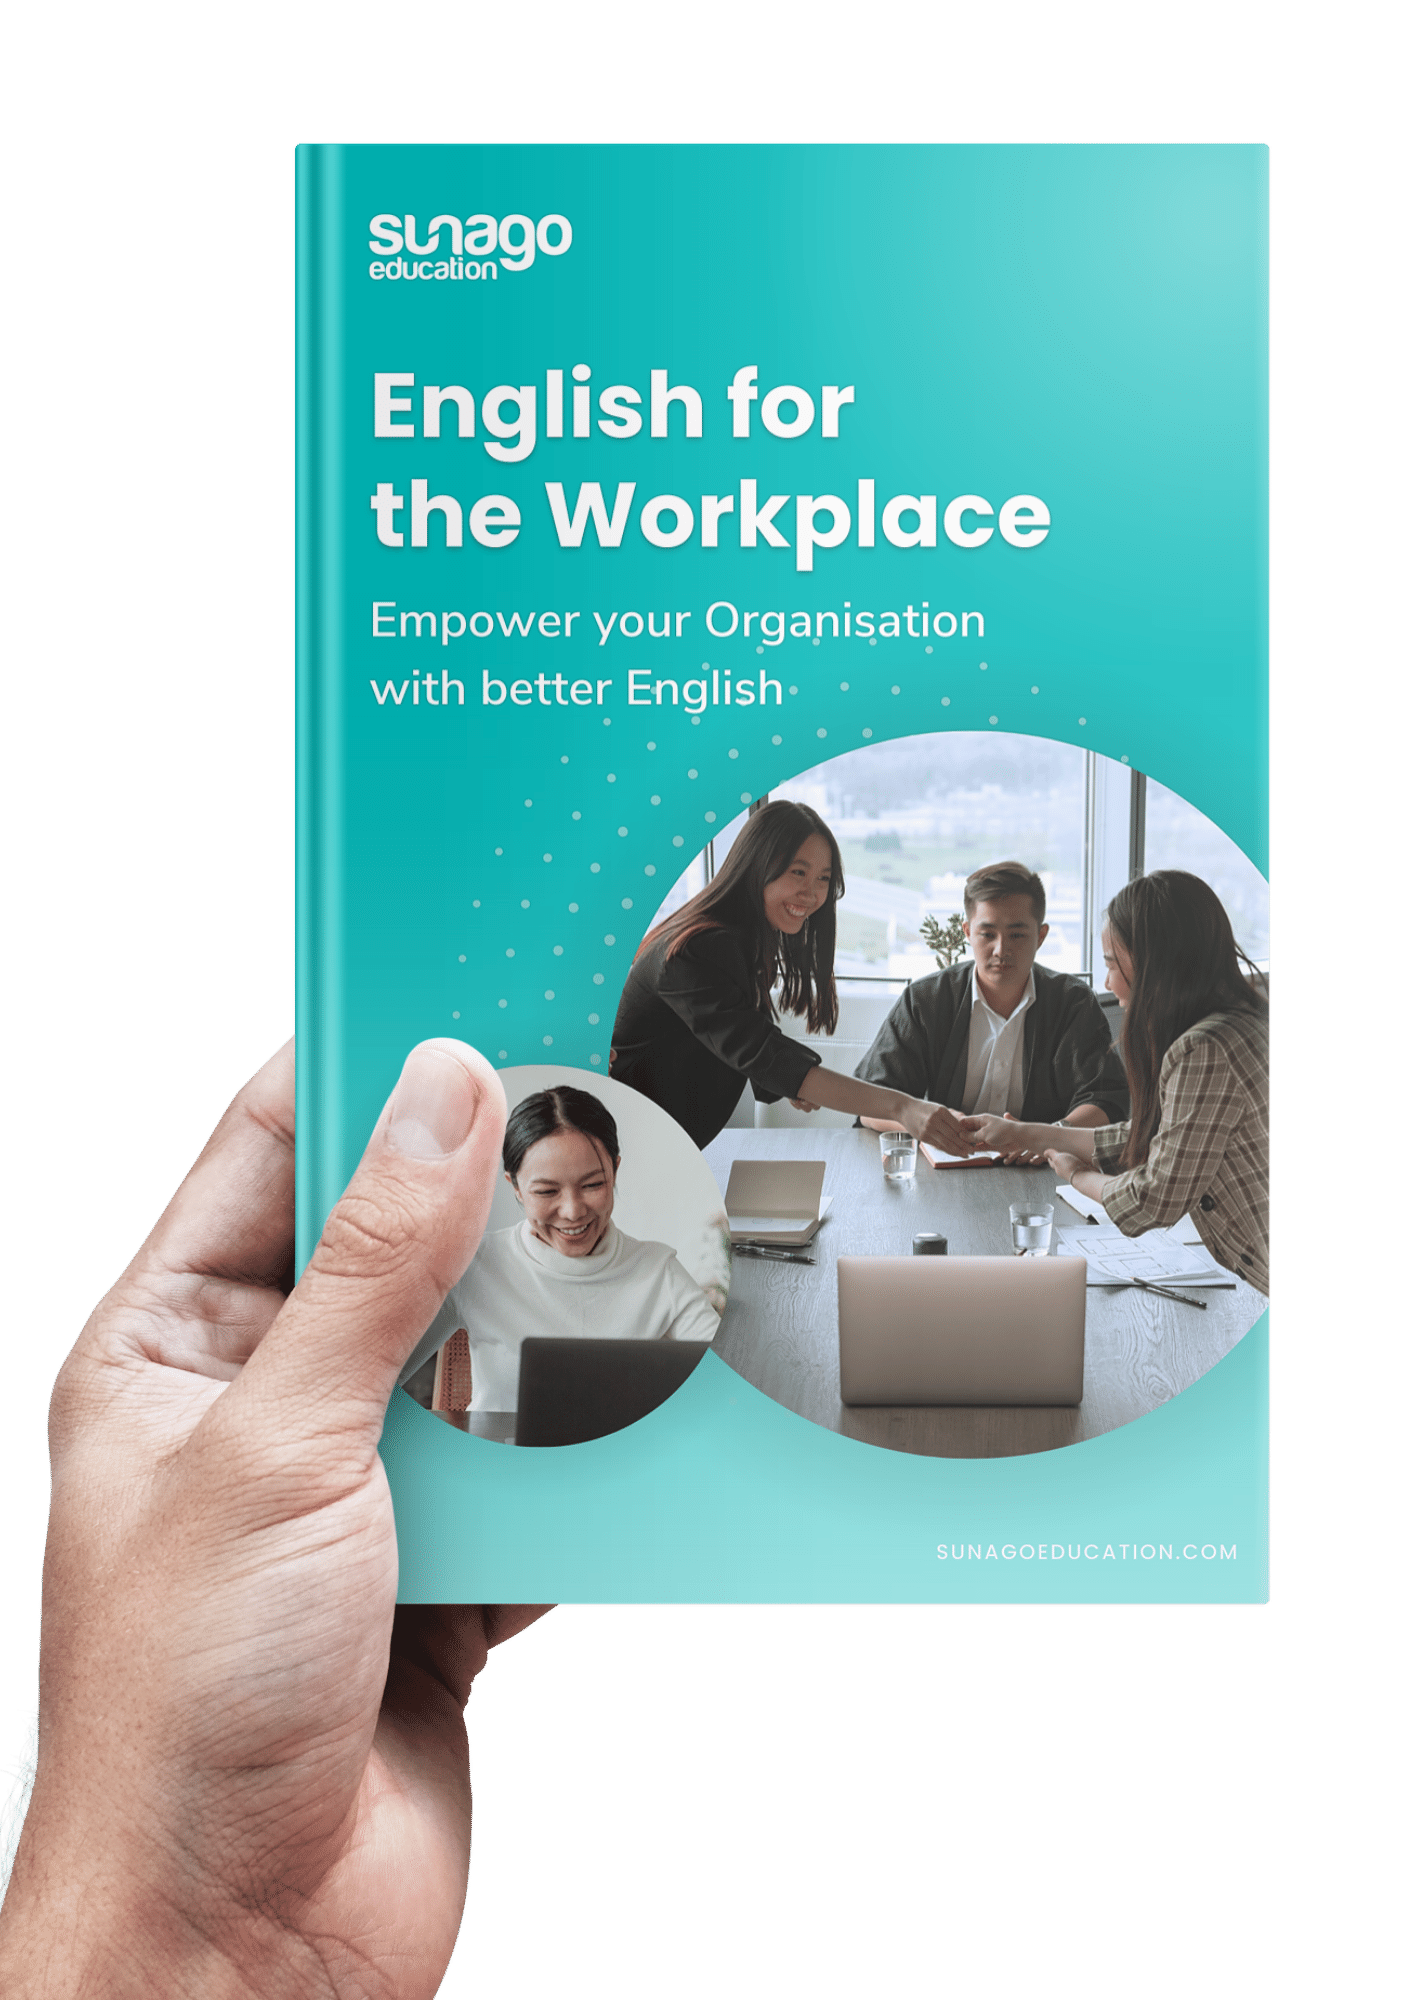 Sunago Workplace English Brochure